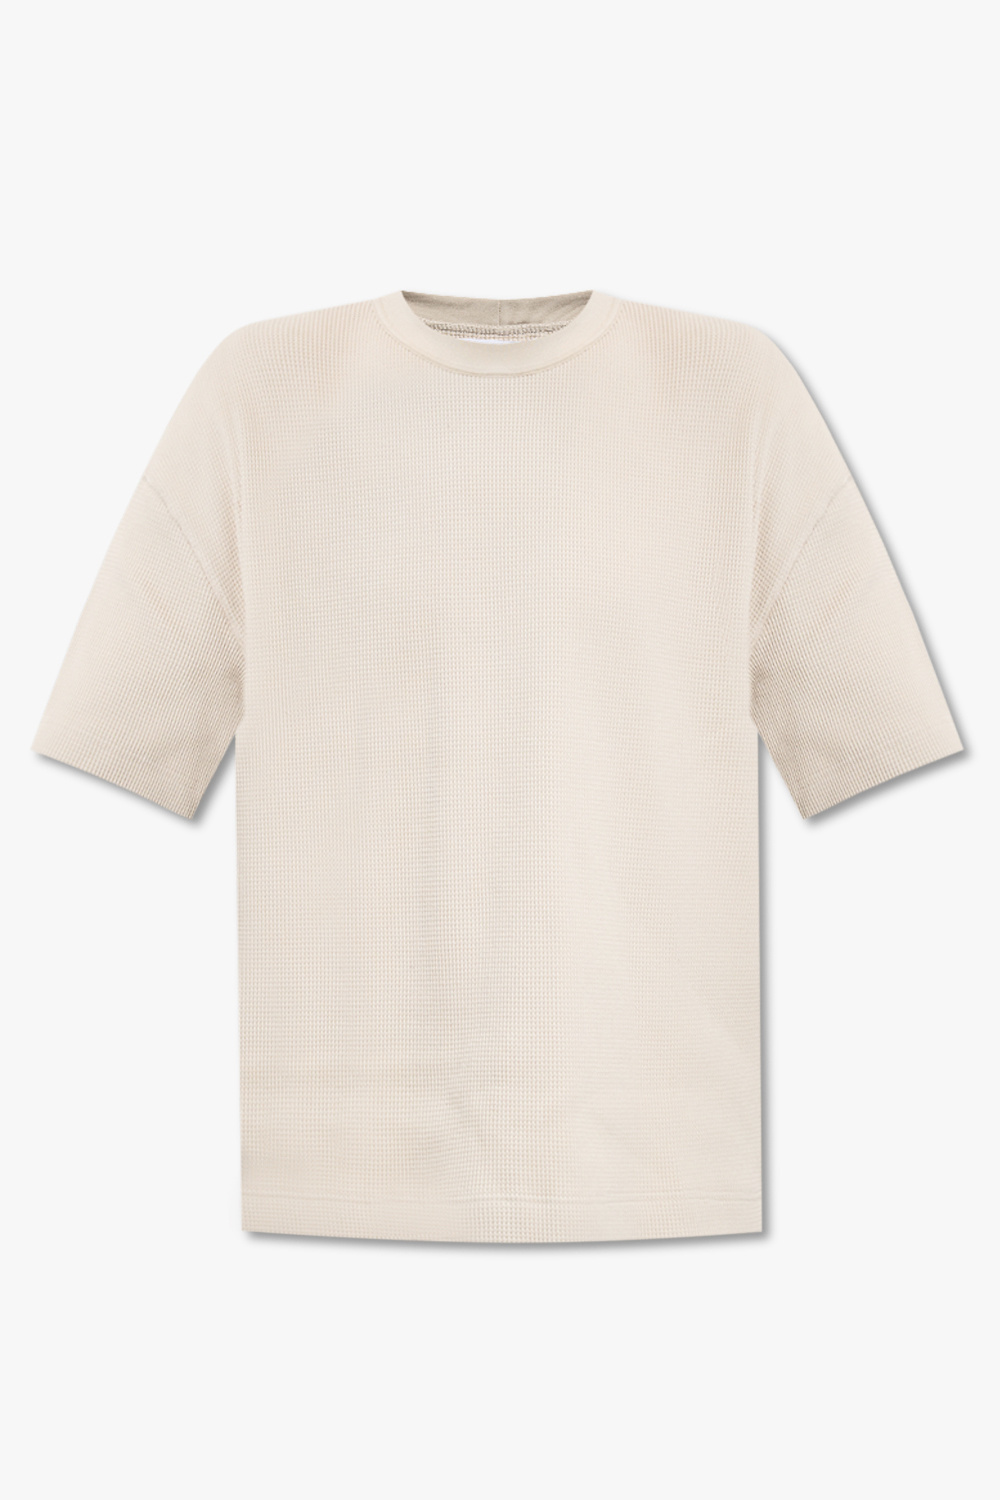 Samsøe Samsøe ‘Josh’ T-shirt